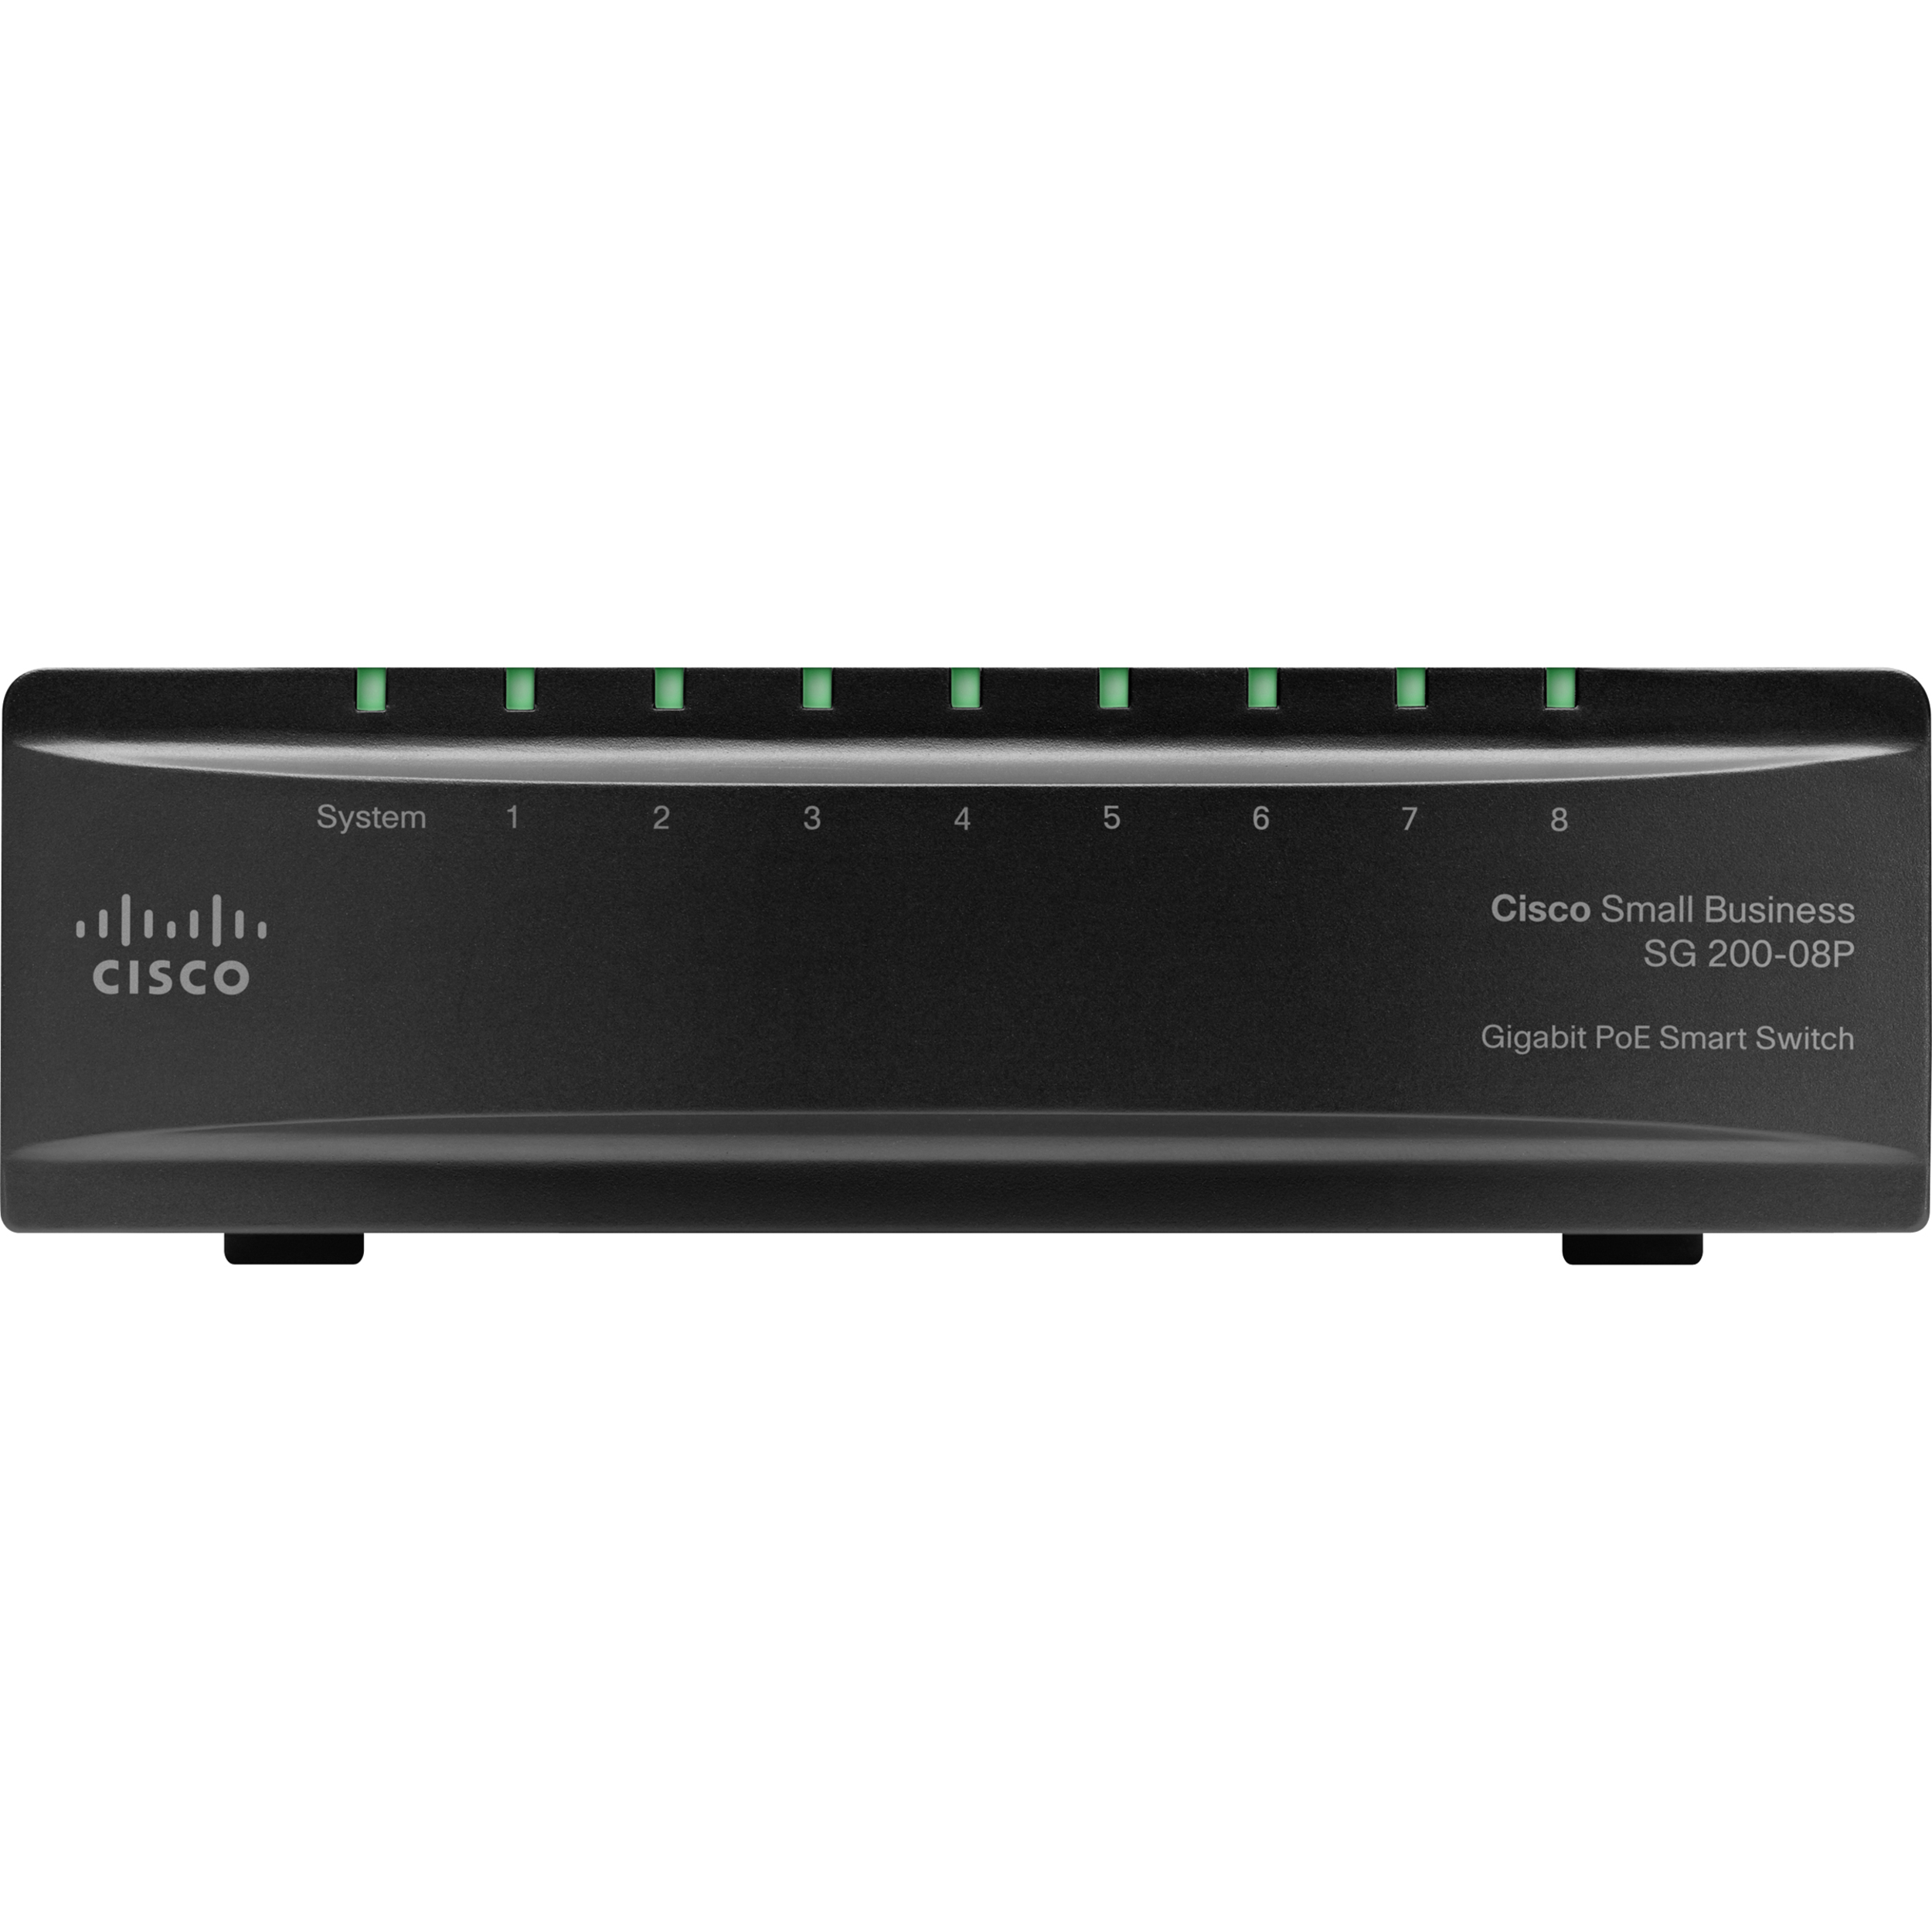 Cisco SG200-08P Gigabit PoE Smart Switch - Picture 1 of 1